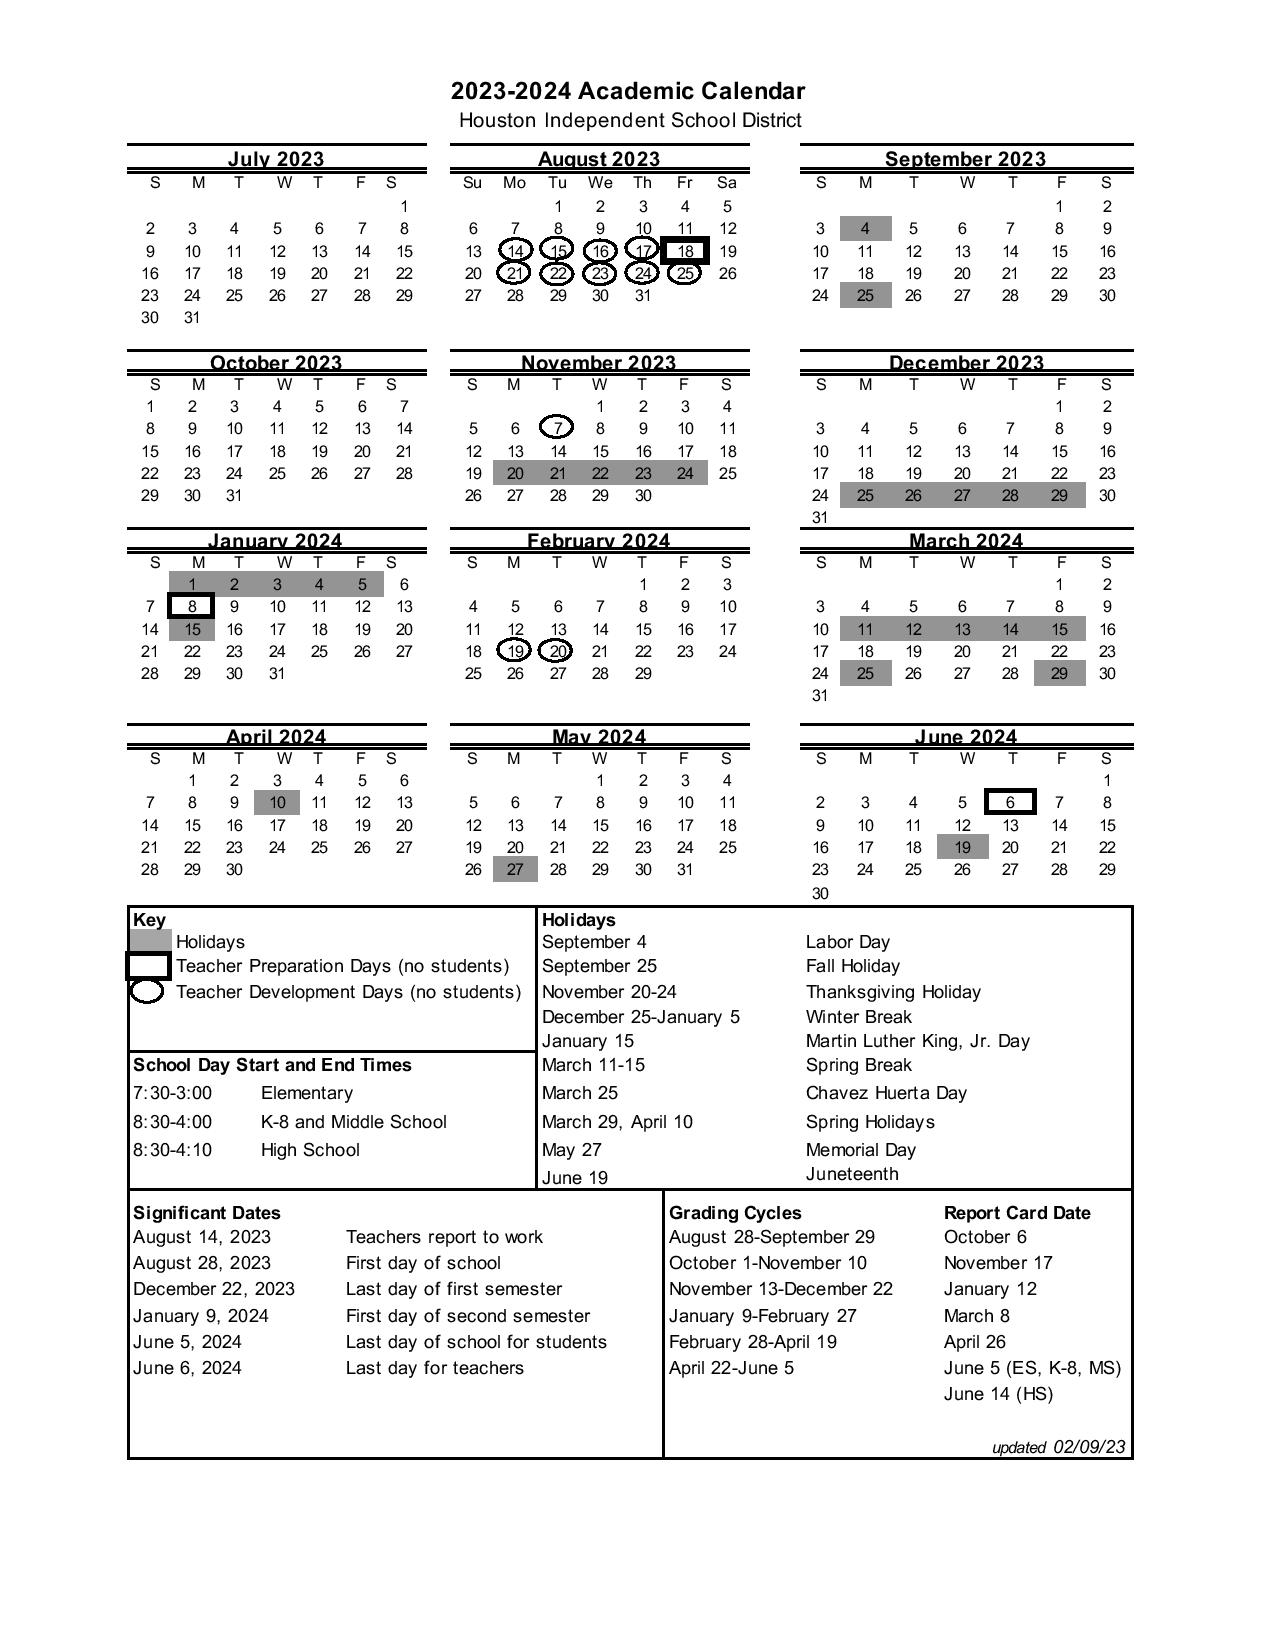 Houston Independent School District Calendar 2023-2024 PDF